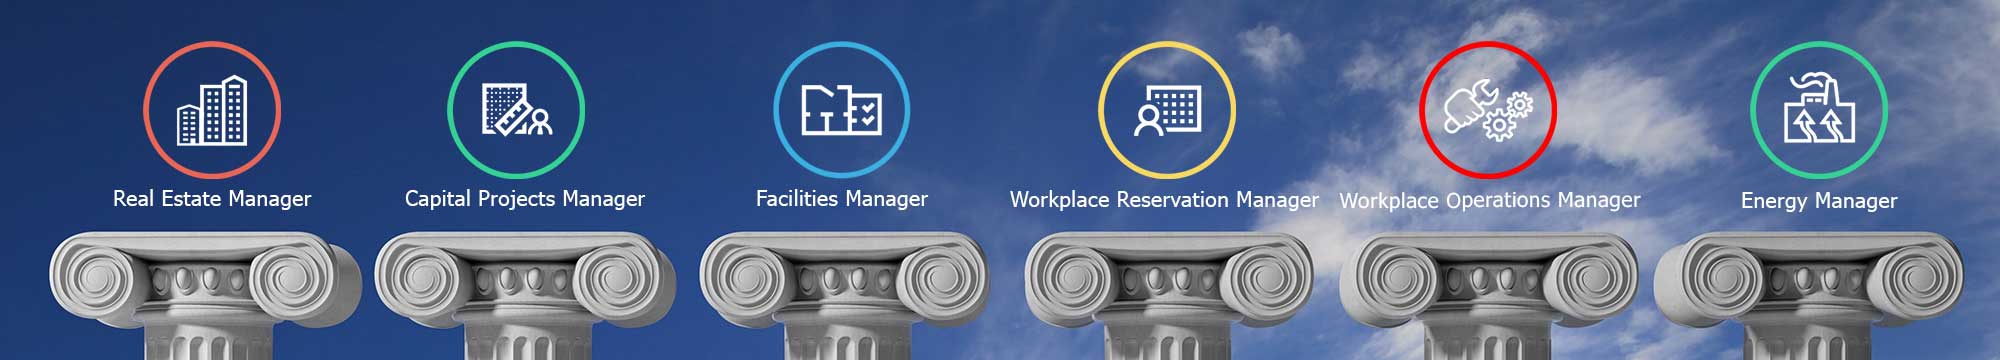 TRIRIGA Logo - The Six Pillars of IWMS: The Ultimate Enterprise Management Tool